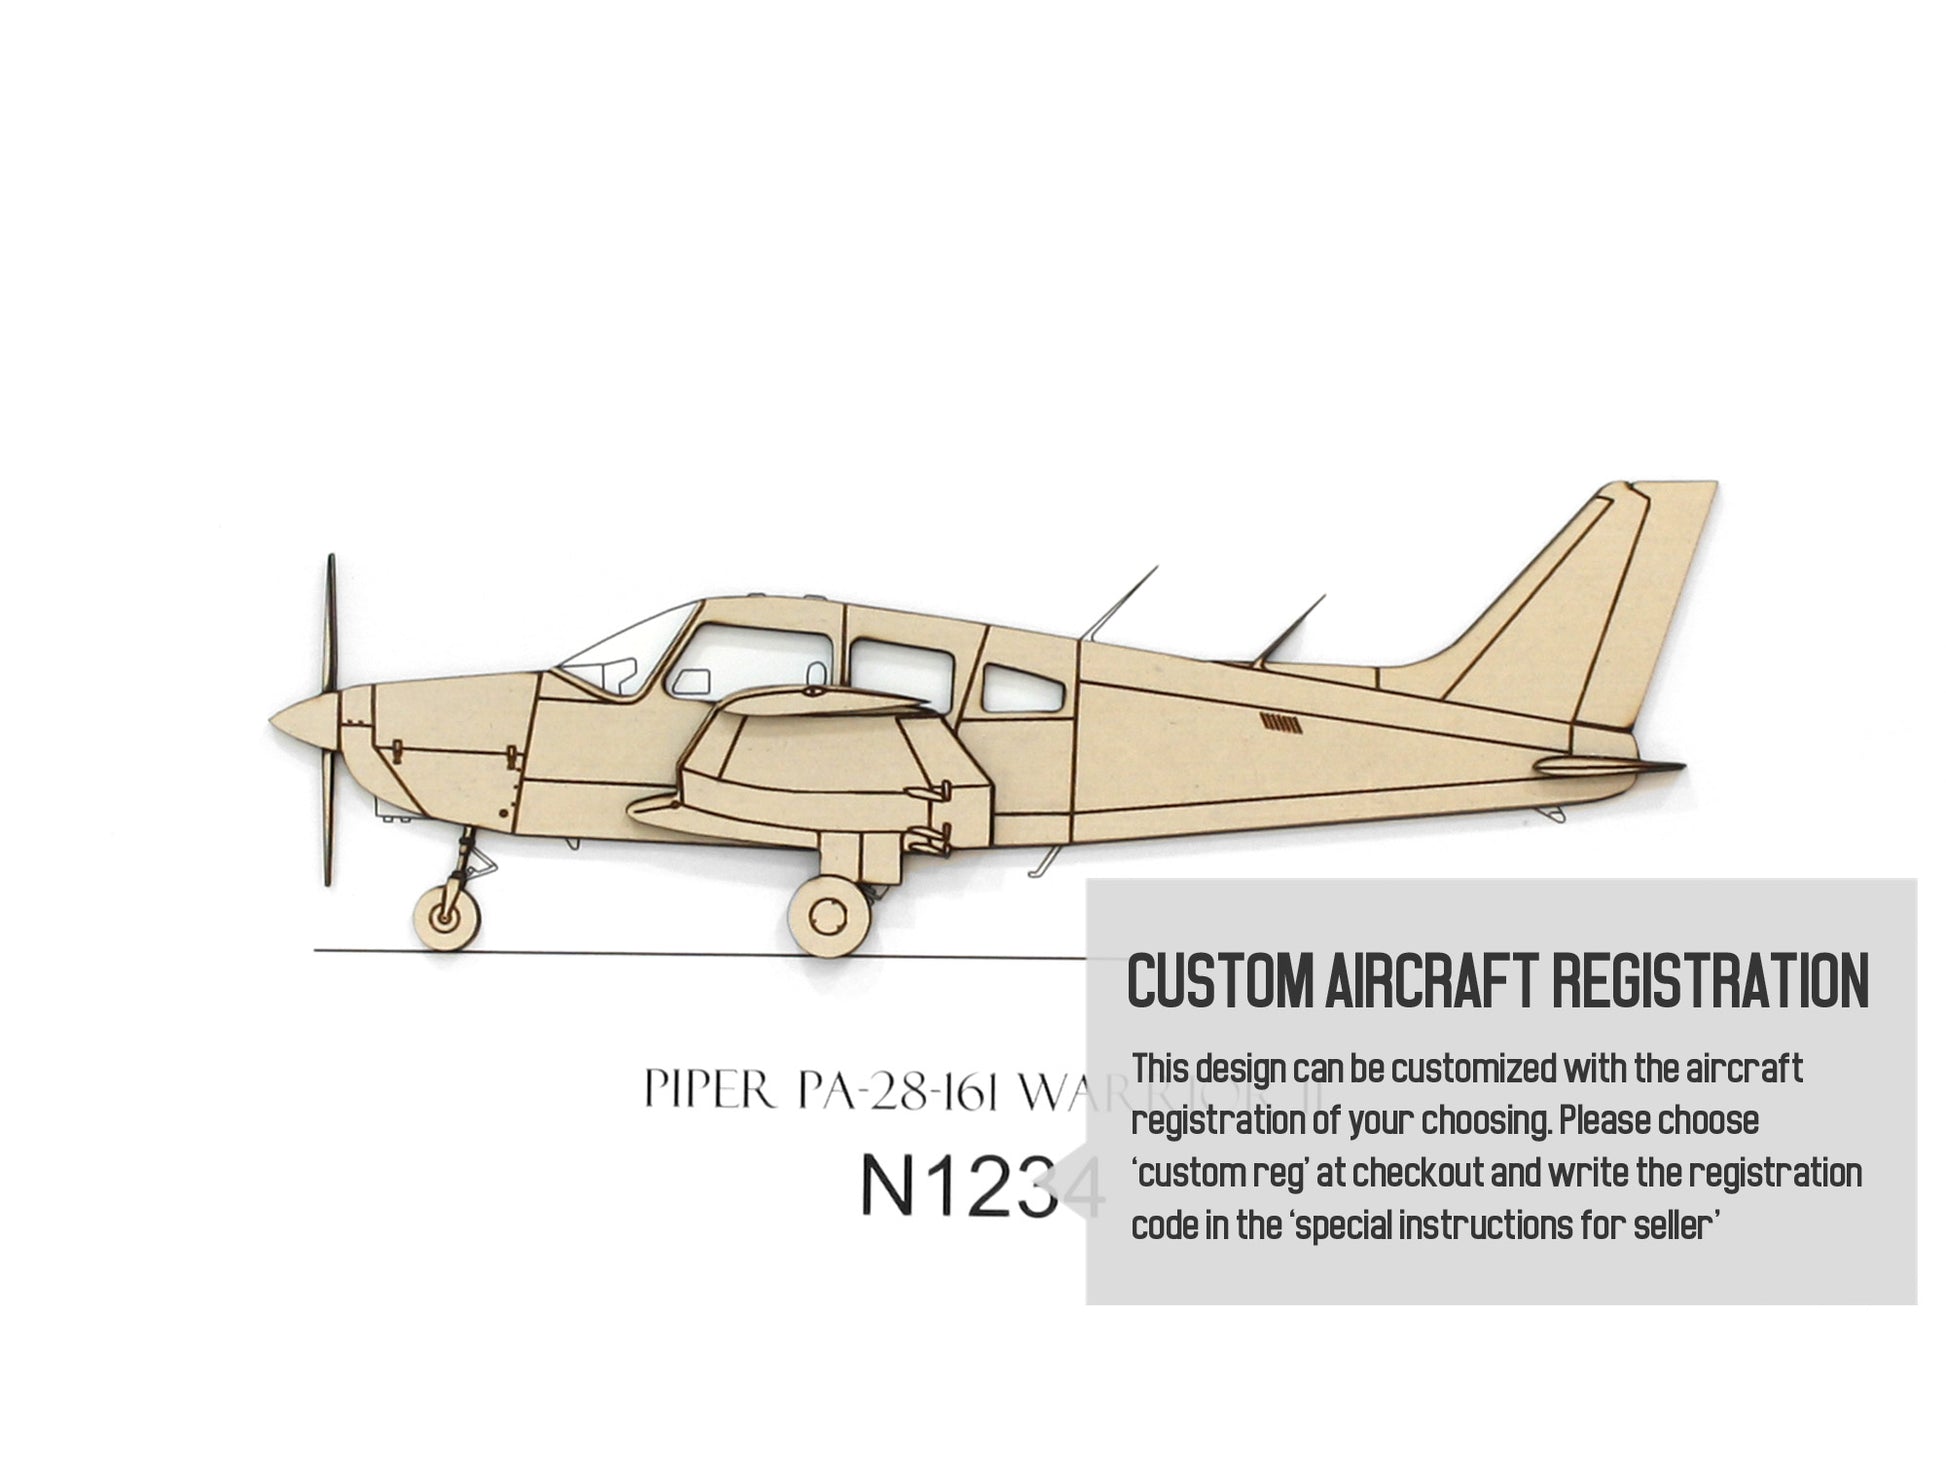 Piper PA-28-161 Warrior II custom aviation art